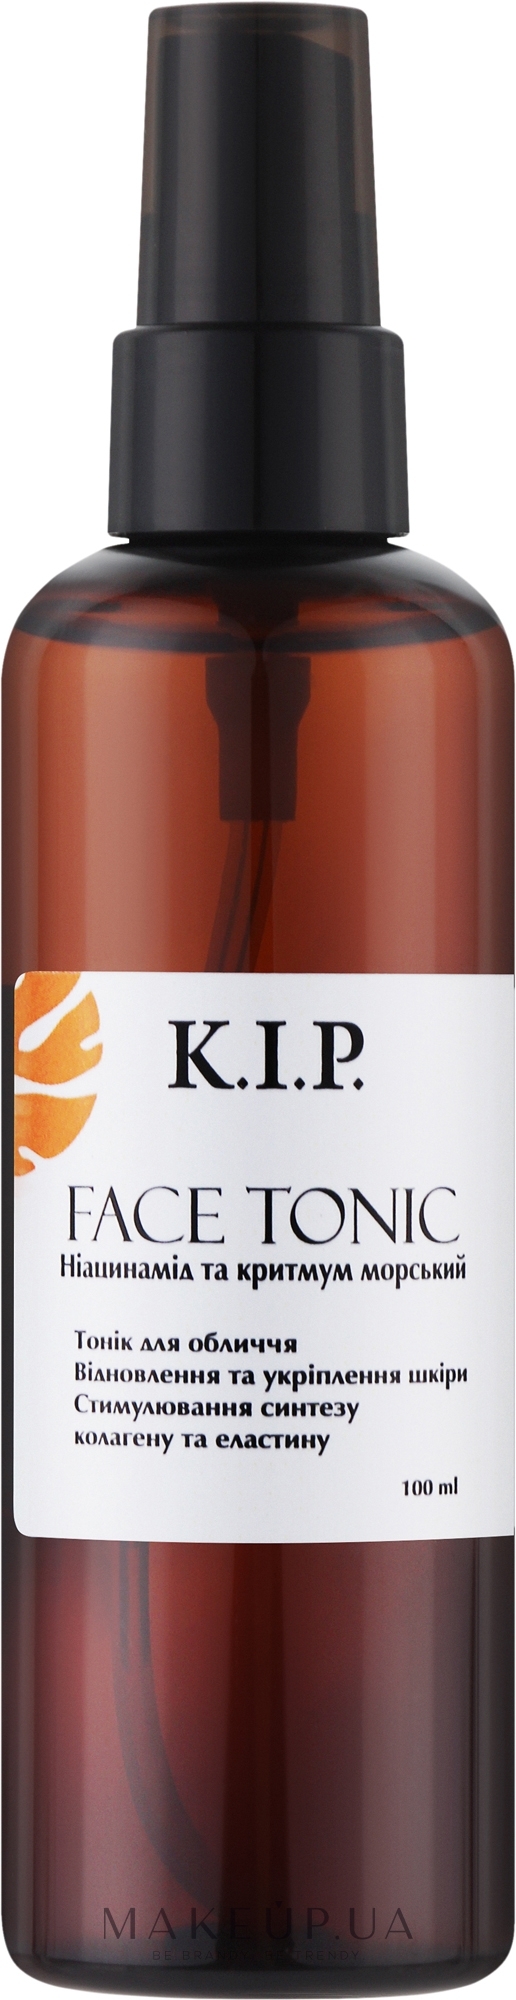 Тоник для лица "Ниацинамид и критмум морской" - K.I.P. Face Tonic — фото 100ml